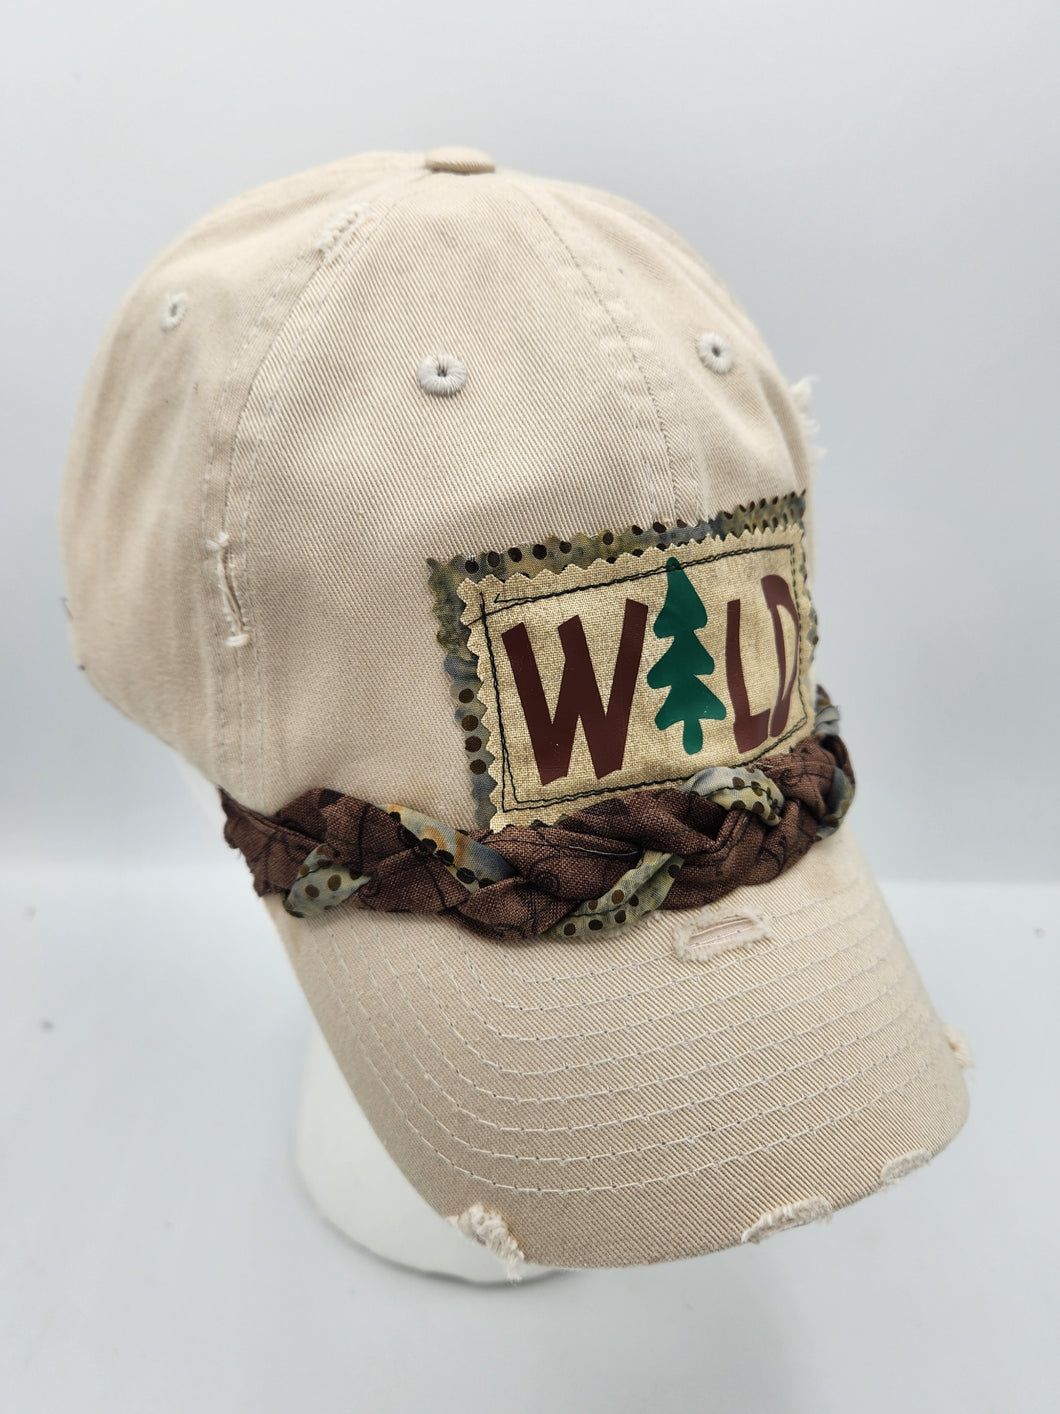 handmade baseball cap, shabby chic hat, embellished cap, upcycled baseball hat, boutique green bay